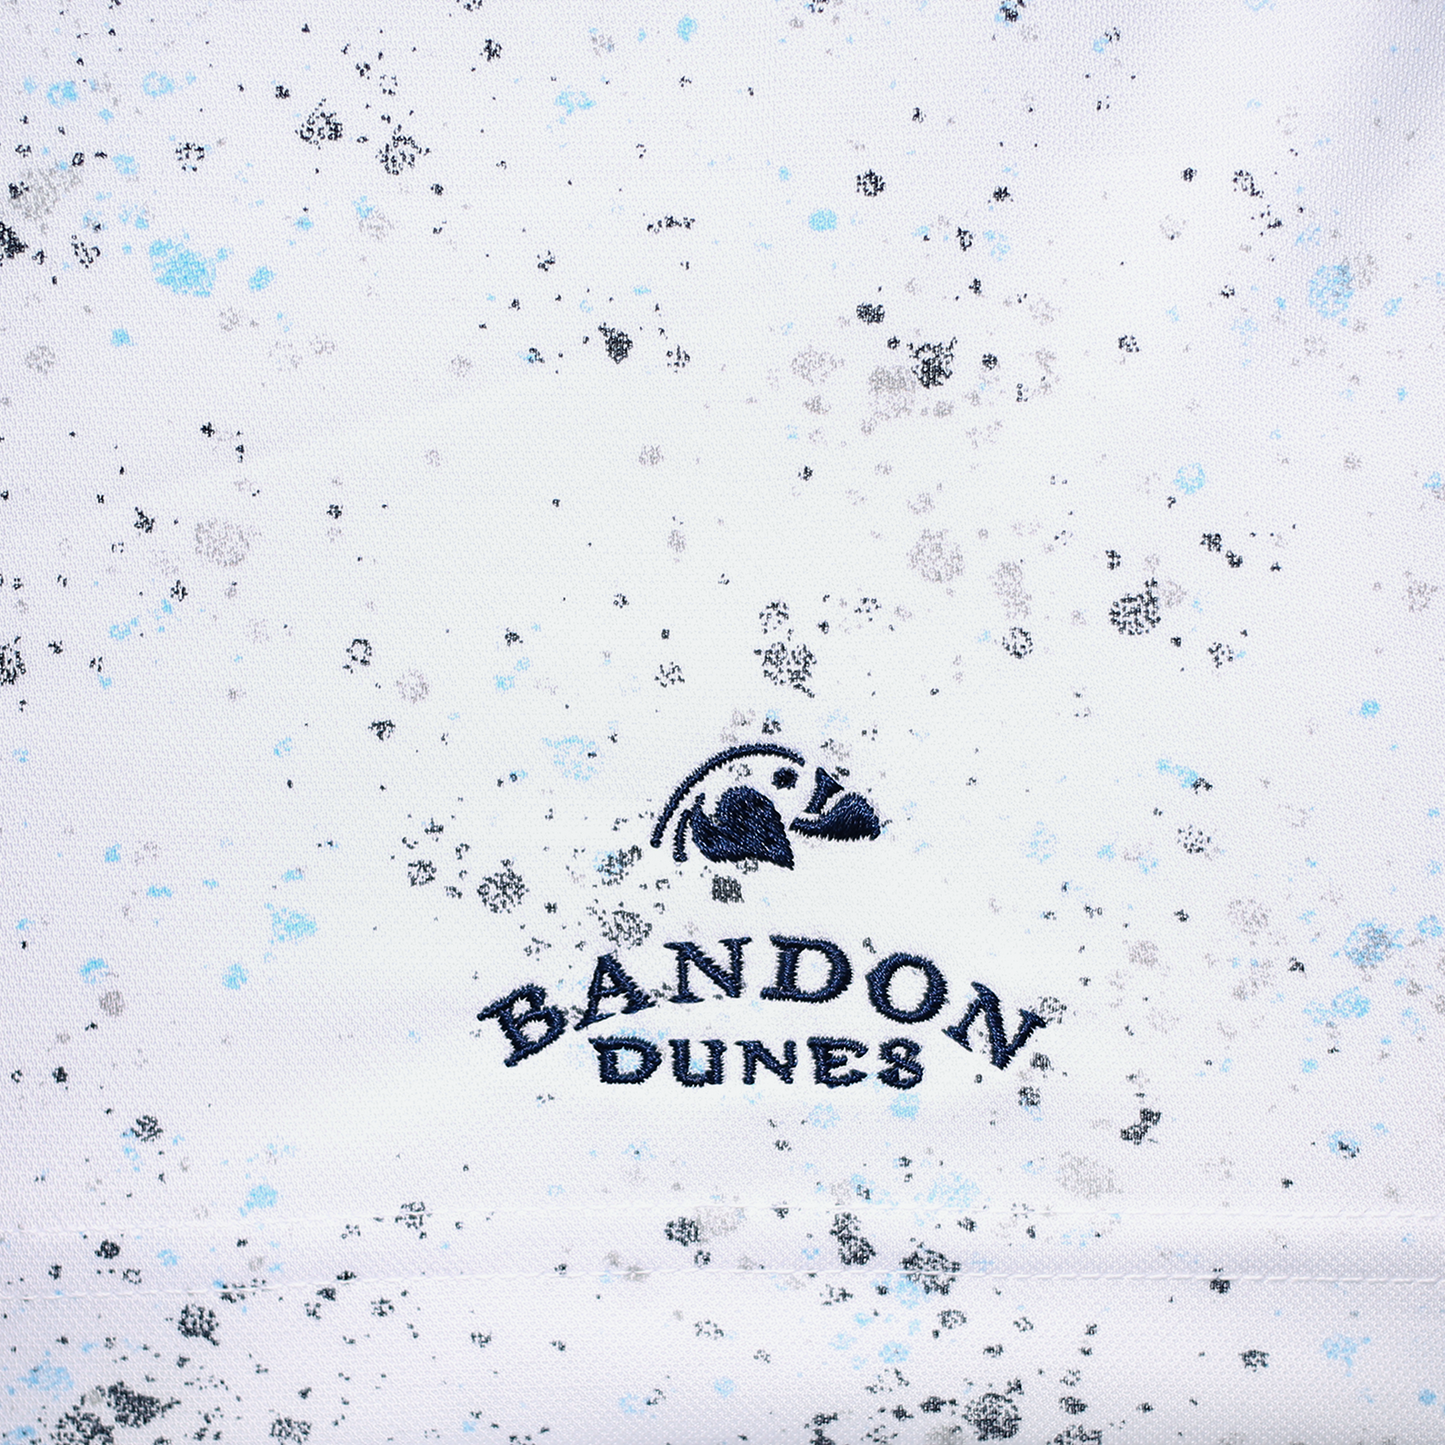 Splatter Print Polo - Bandon Dunes